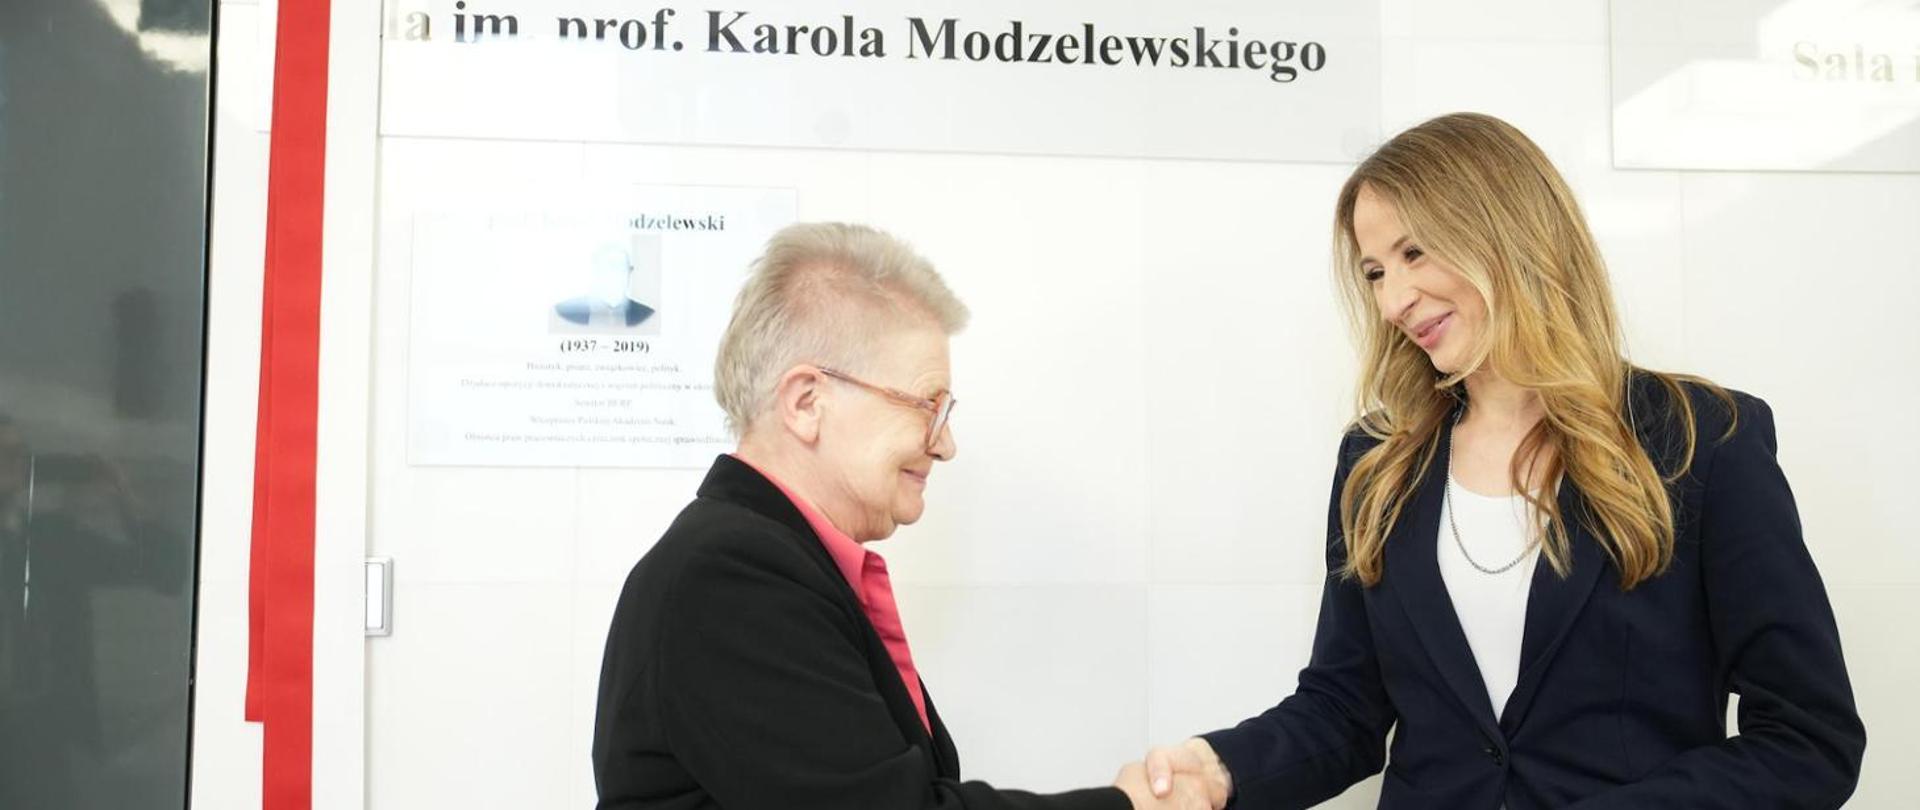 Prof. Karol Modzelewski and Halina Krahelska honoured at the Ministry of Family, Labour and Social Policy